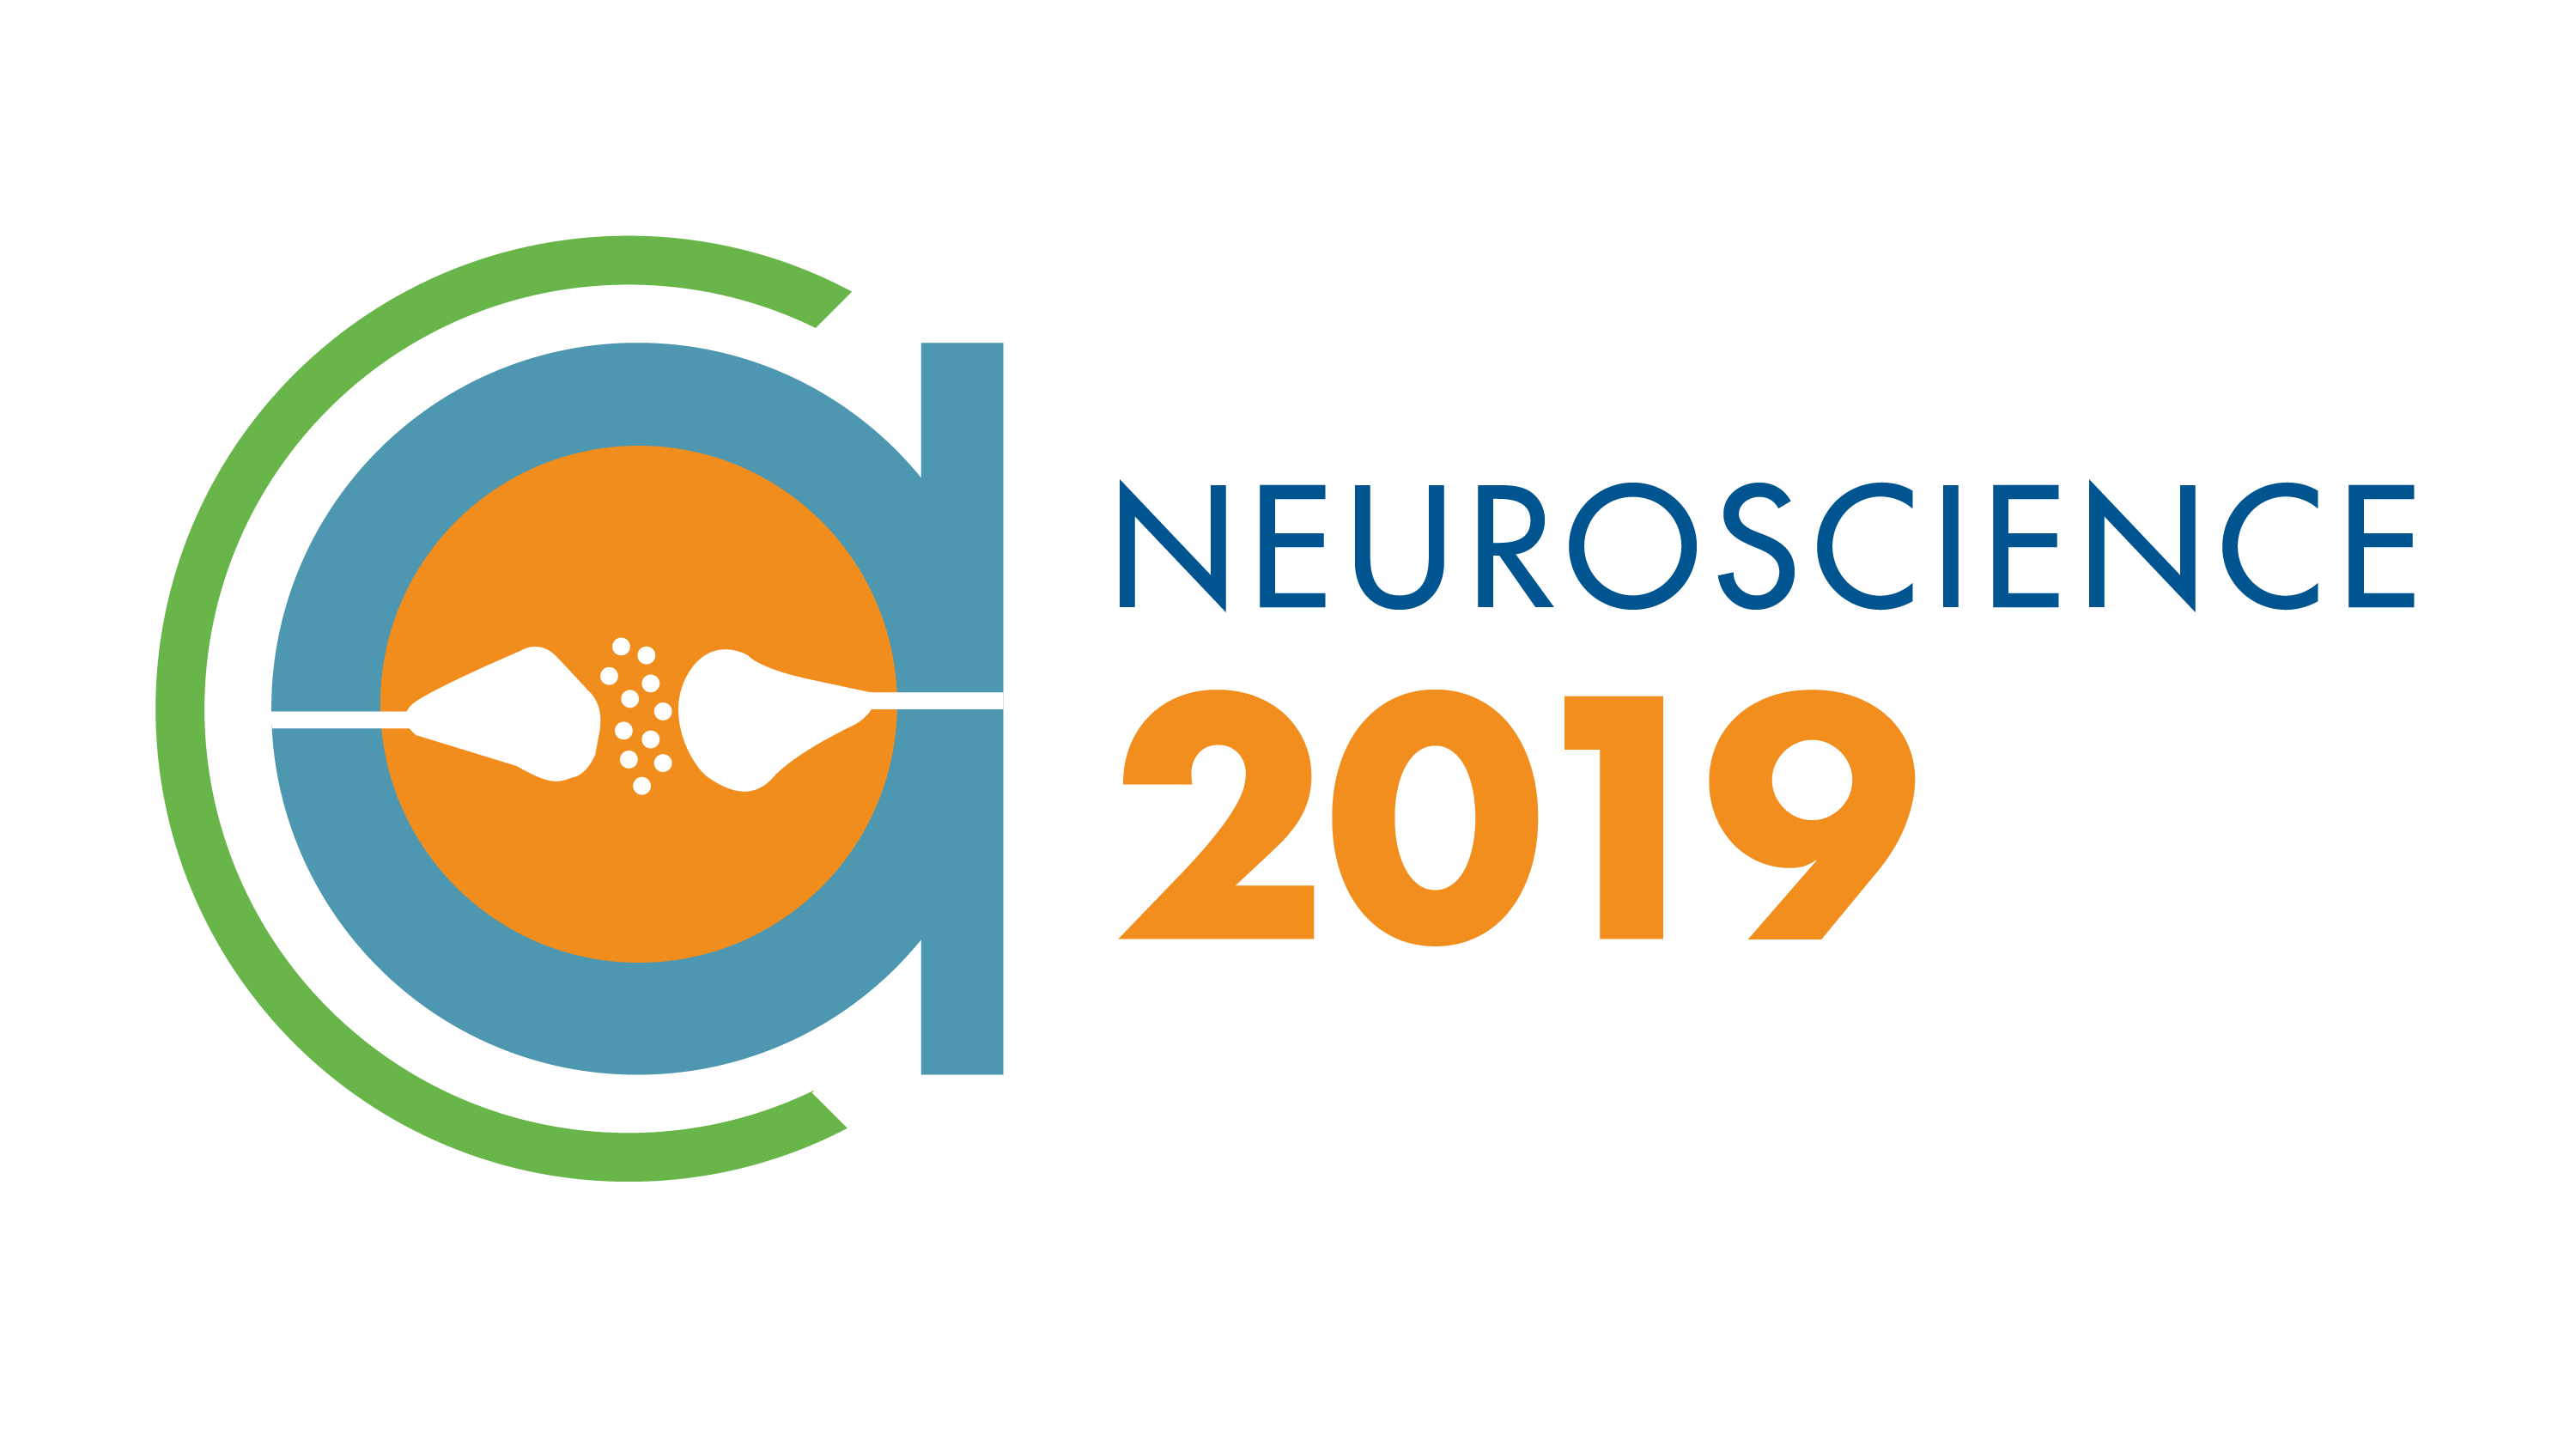 neuroscience 2019 meeting logo